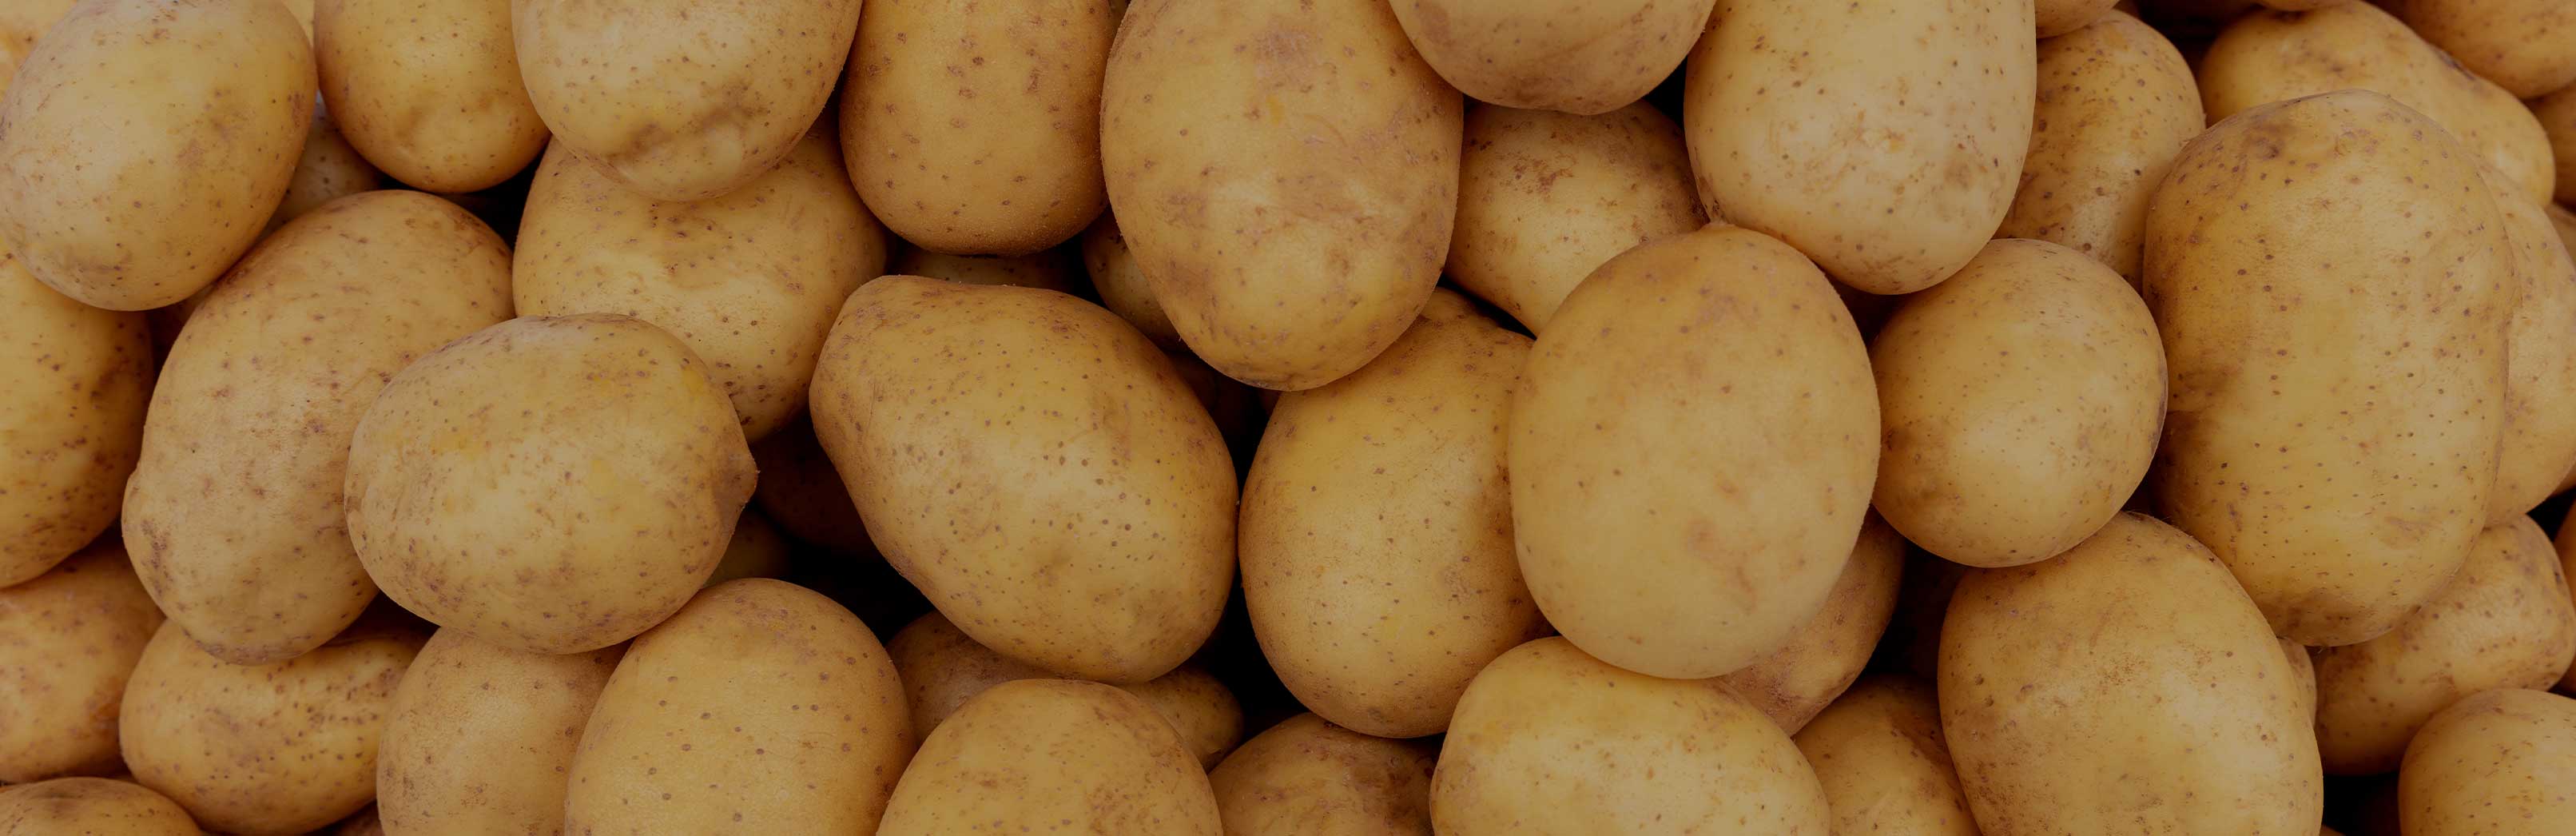 The Versatility Behind the Potato